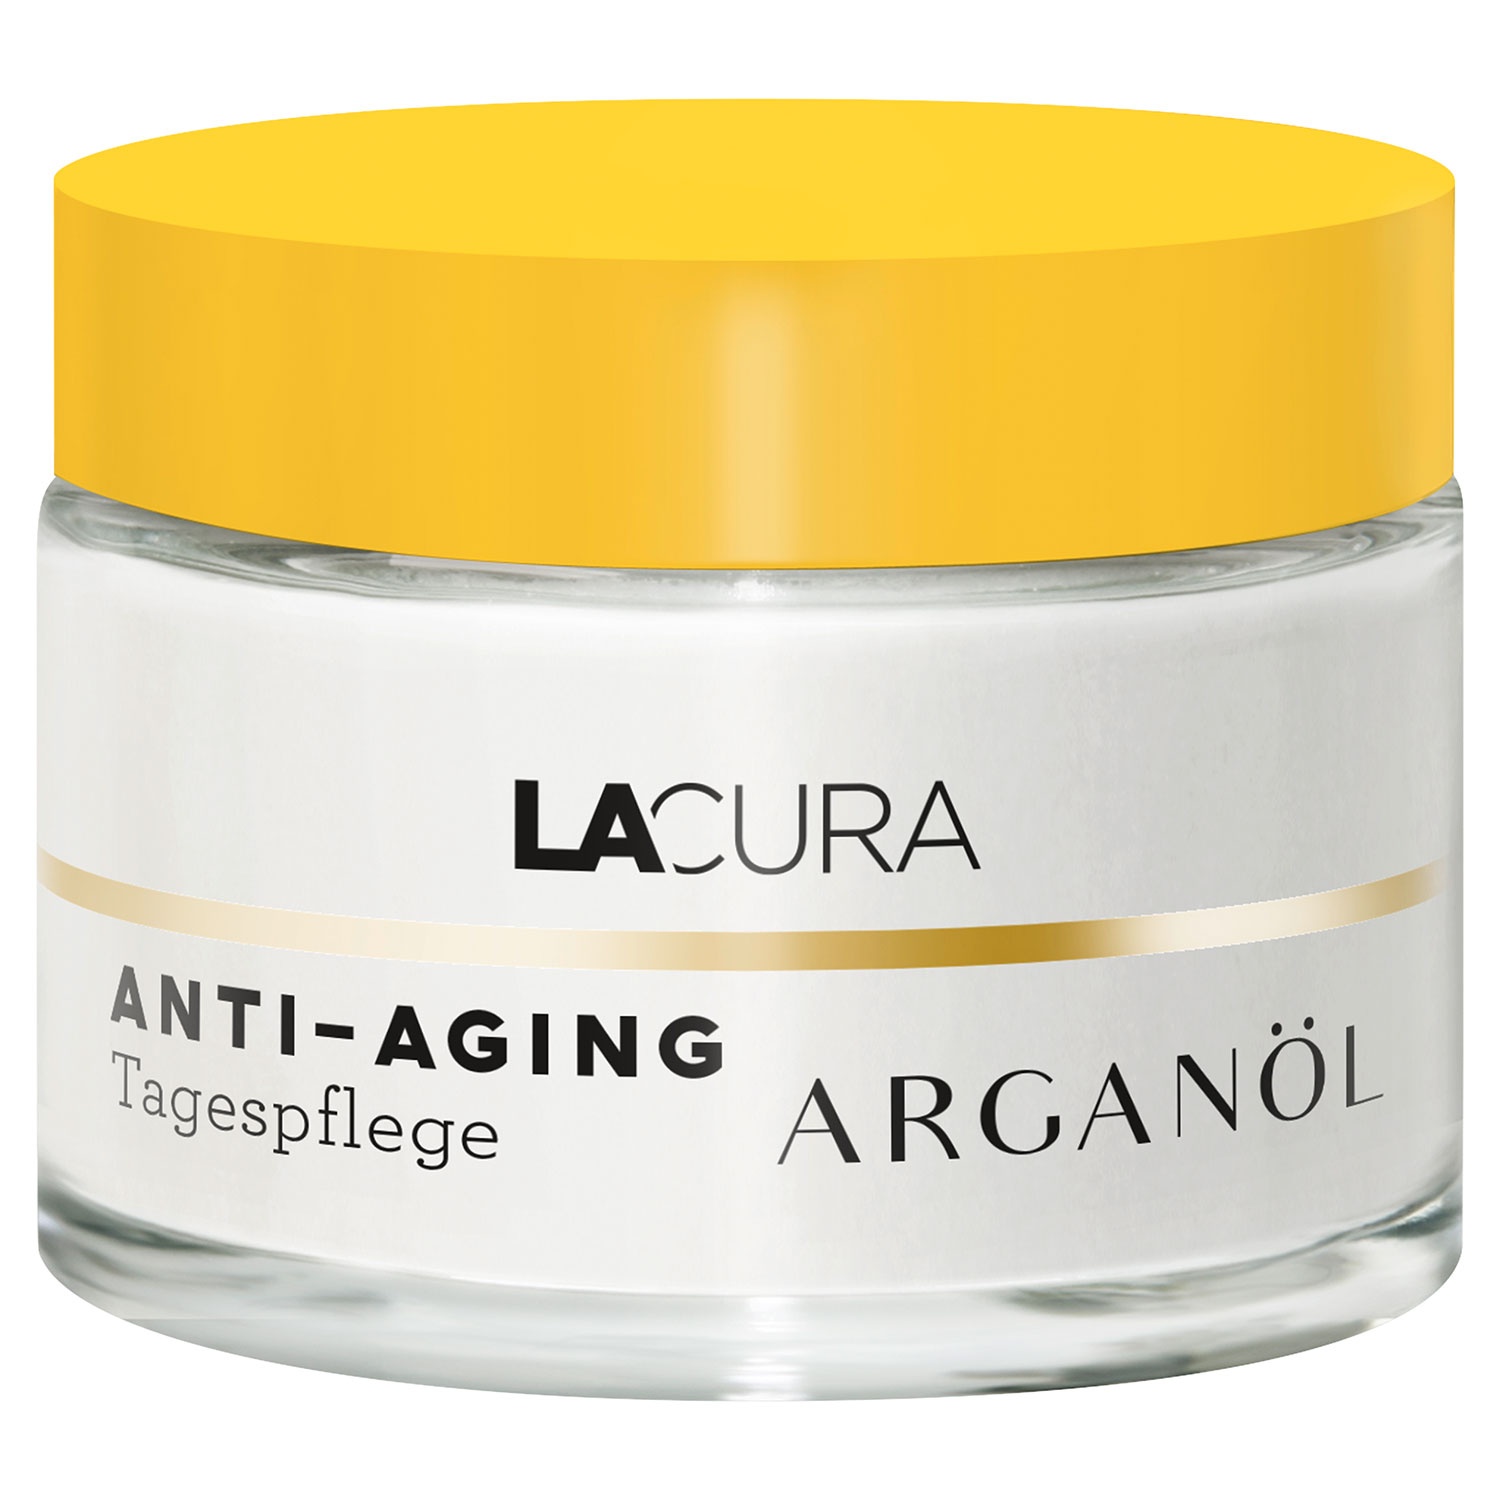 LACURA Arganöl-Anti-Aging-Tages- oder -Nachtpflege 50 ml